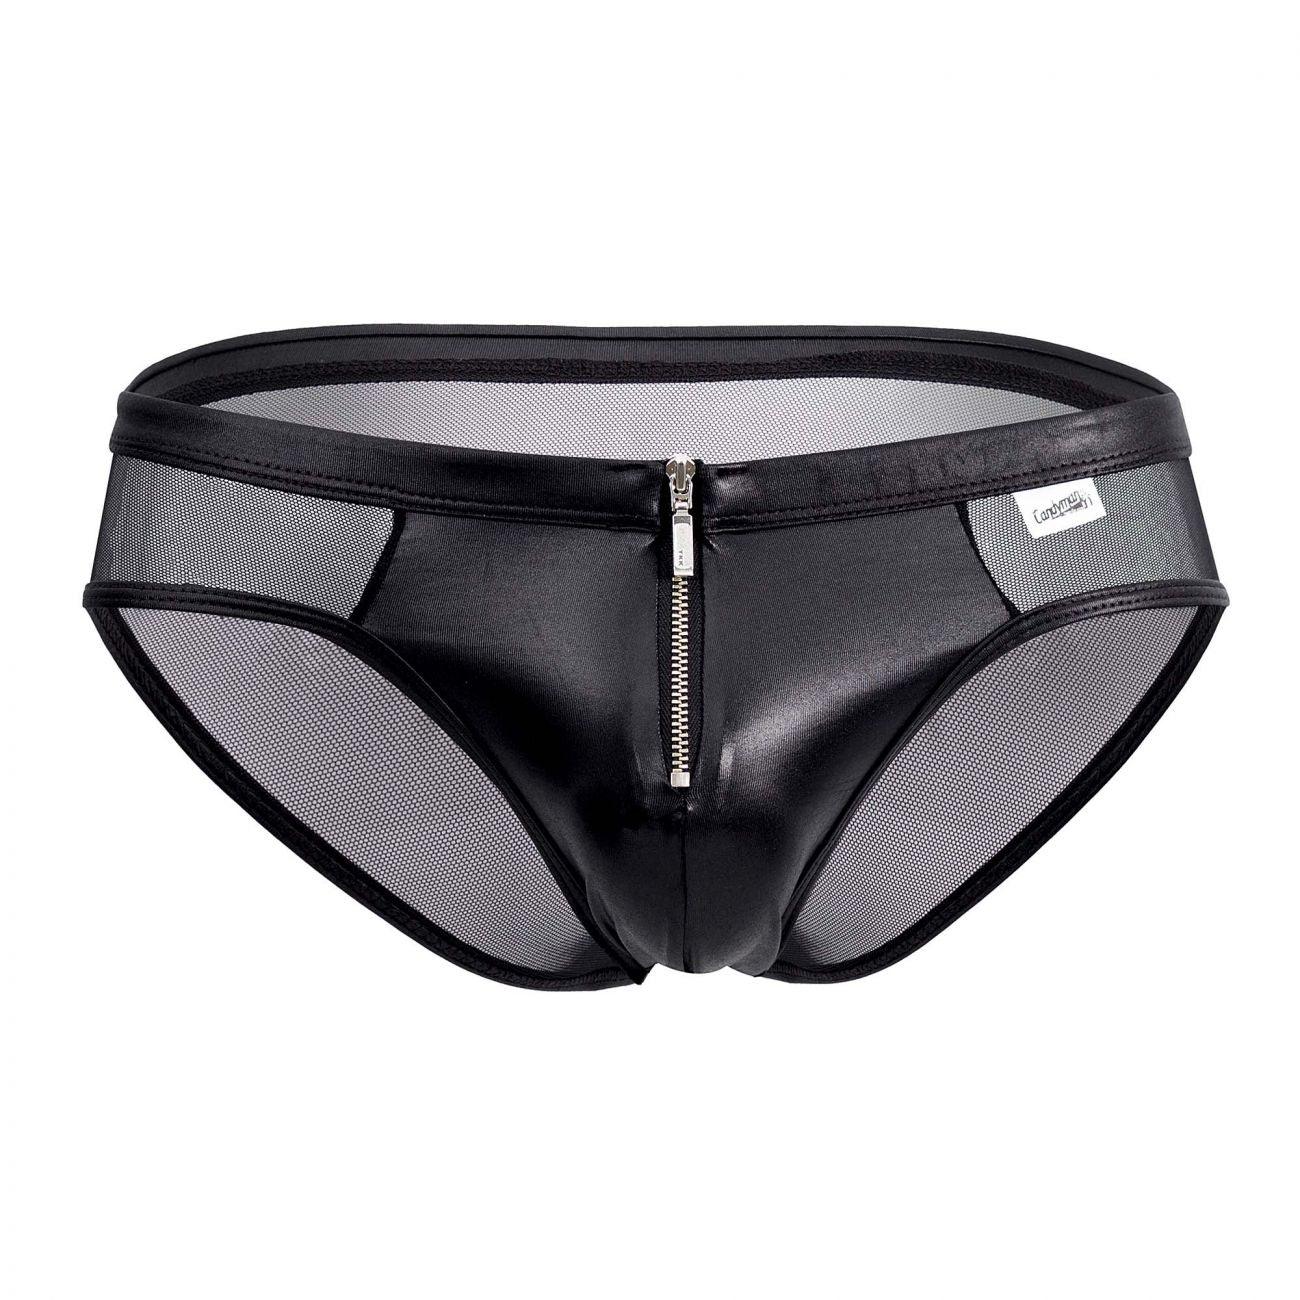 image of product,Zipper-Mesh Bikini - SEXYEONE